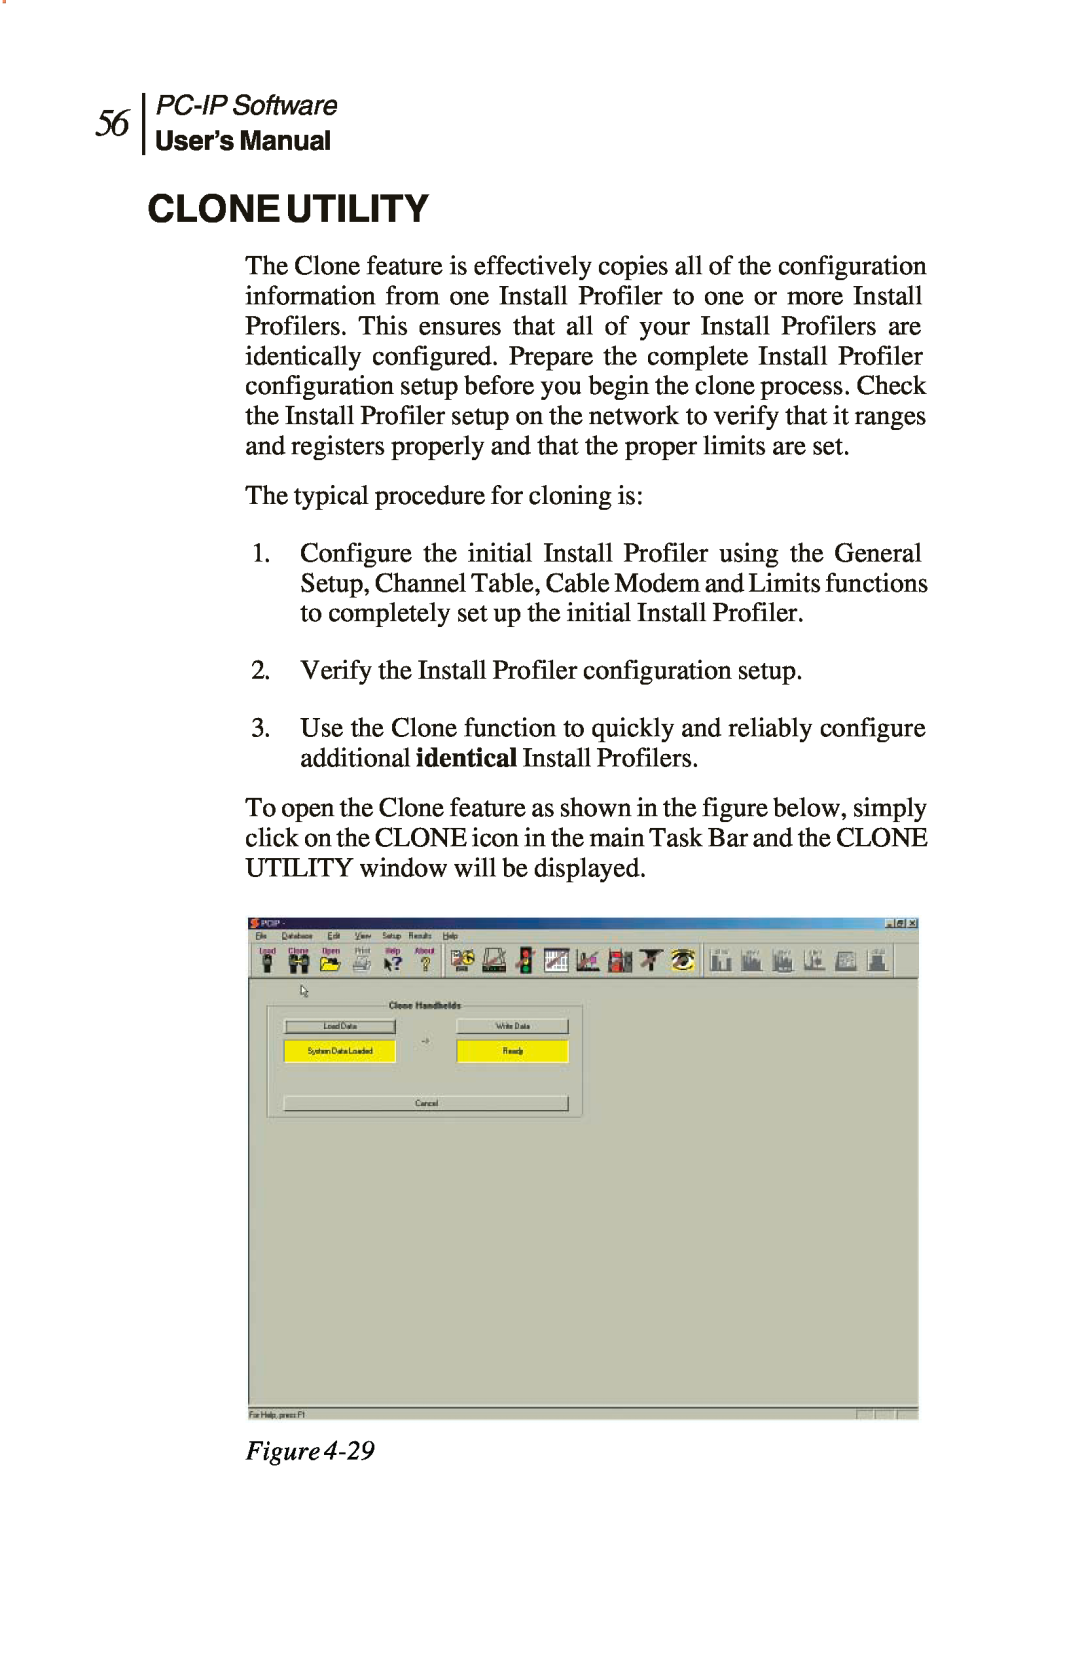 Sunrise Global CM250 IP, CM100 IP, and CM500 IP manual Clone Utility, PC-IPSoftware, User’s Manual, Figure 